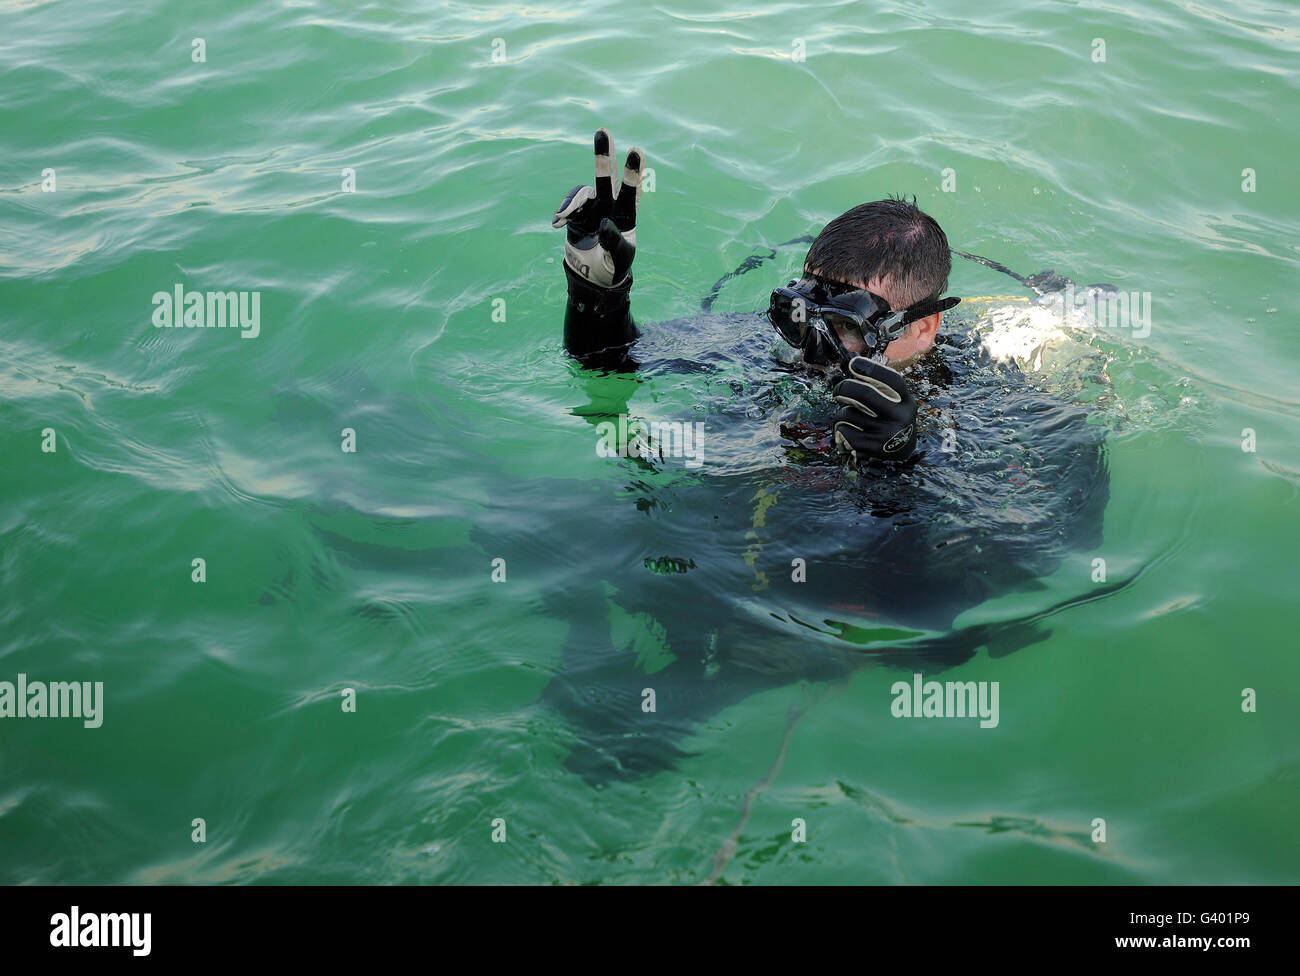 U.S. Navy diver signals before diving underwater. Stock Photo